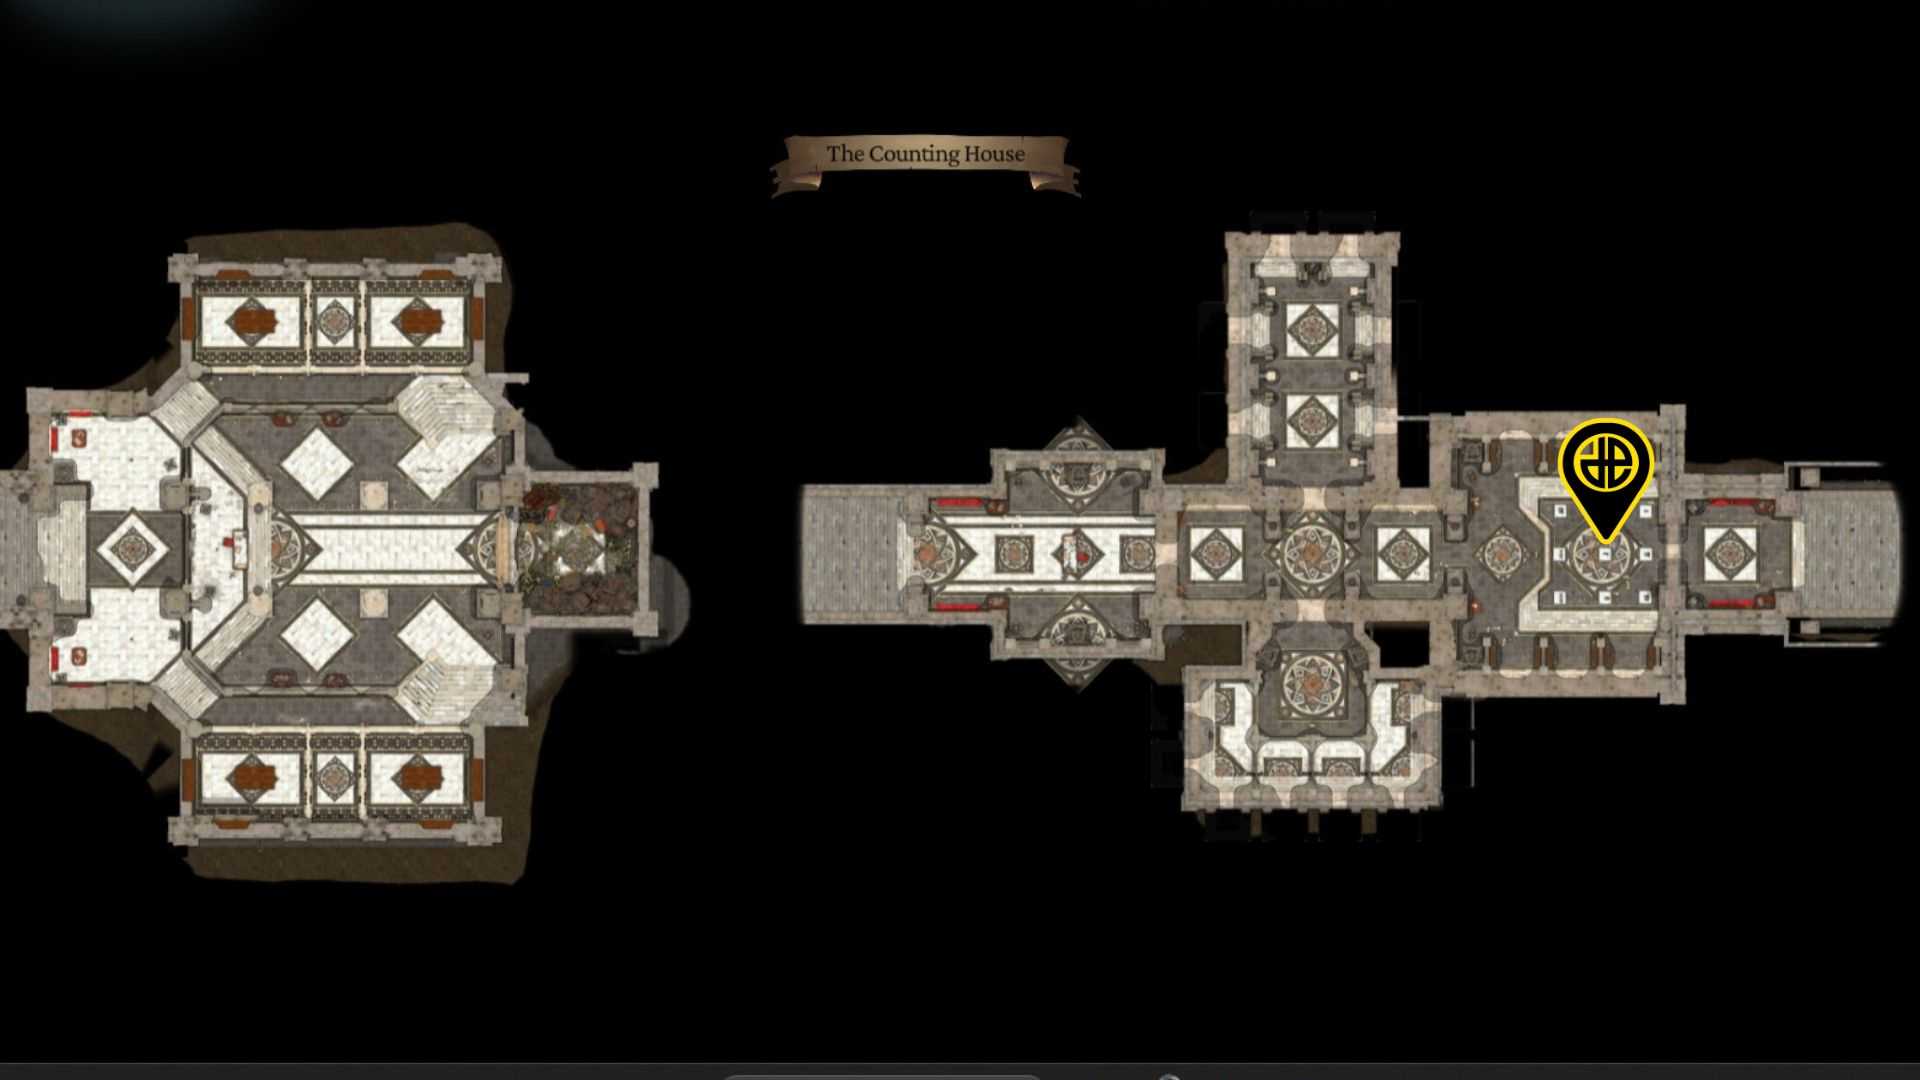 Minsc location in Baldur's Gate 3